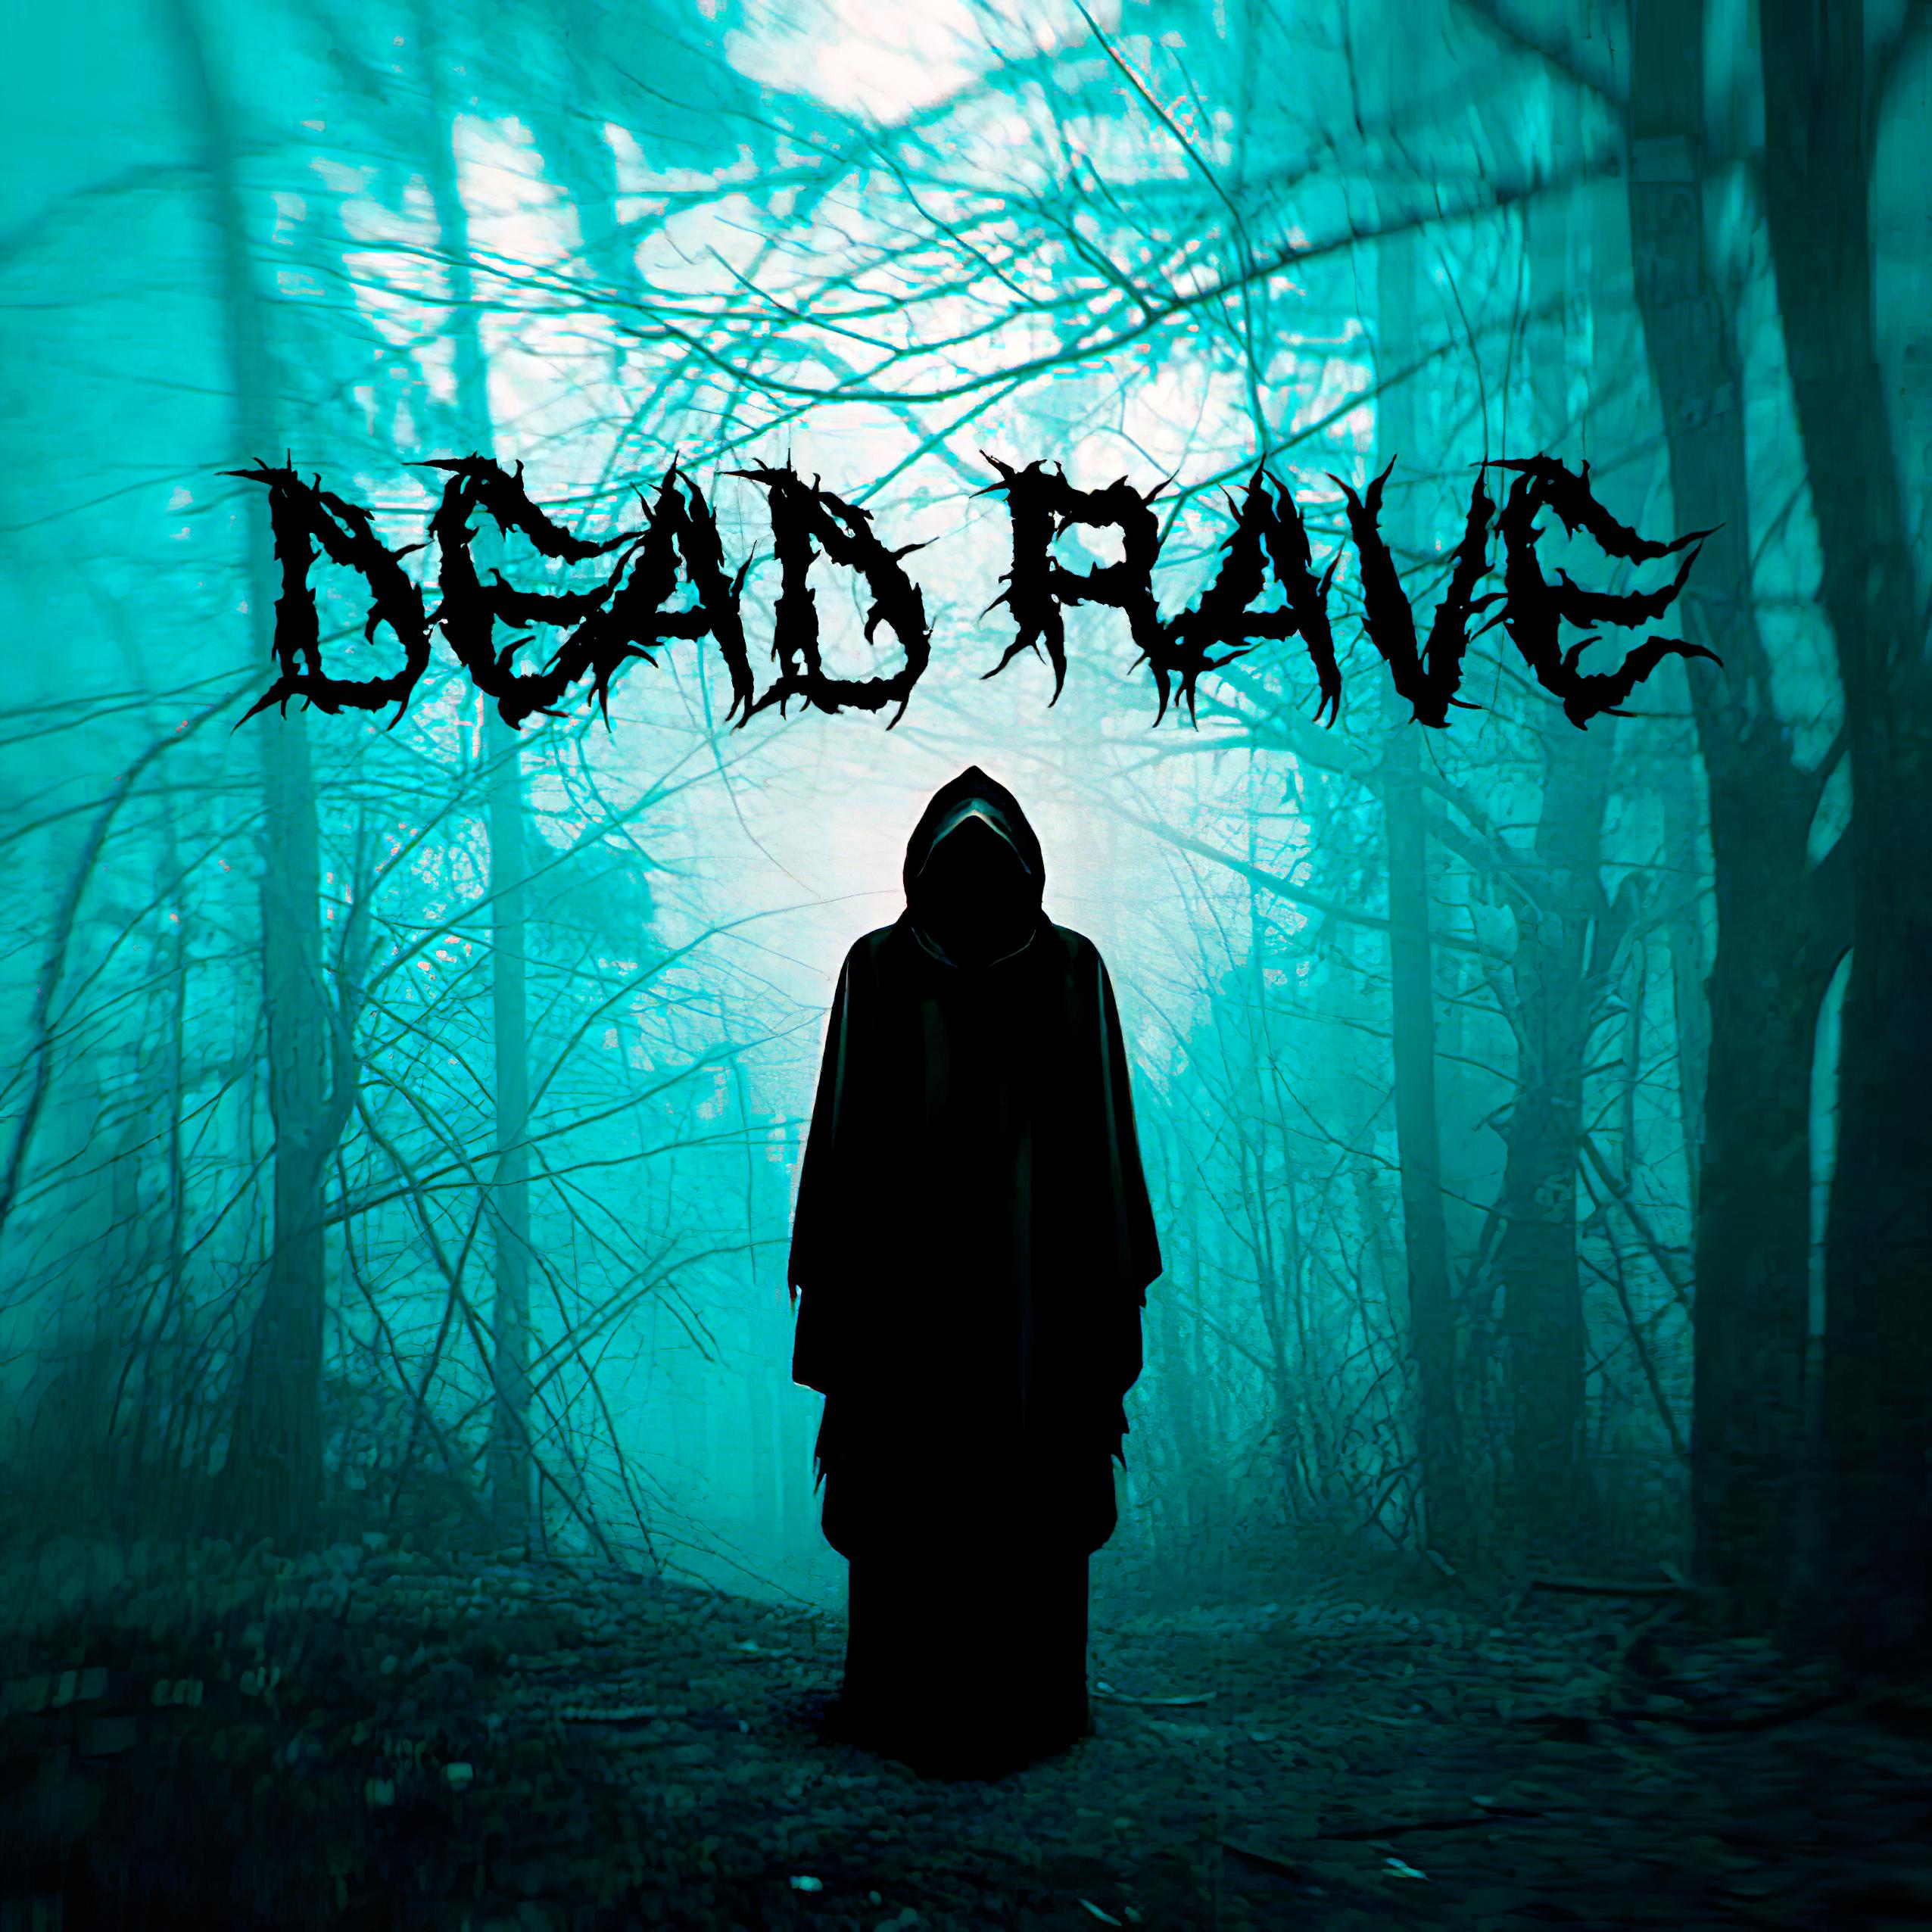 Постер альбома Dead Rave